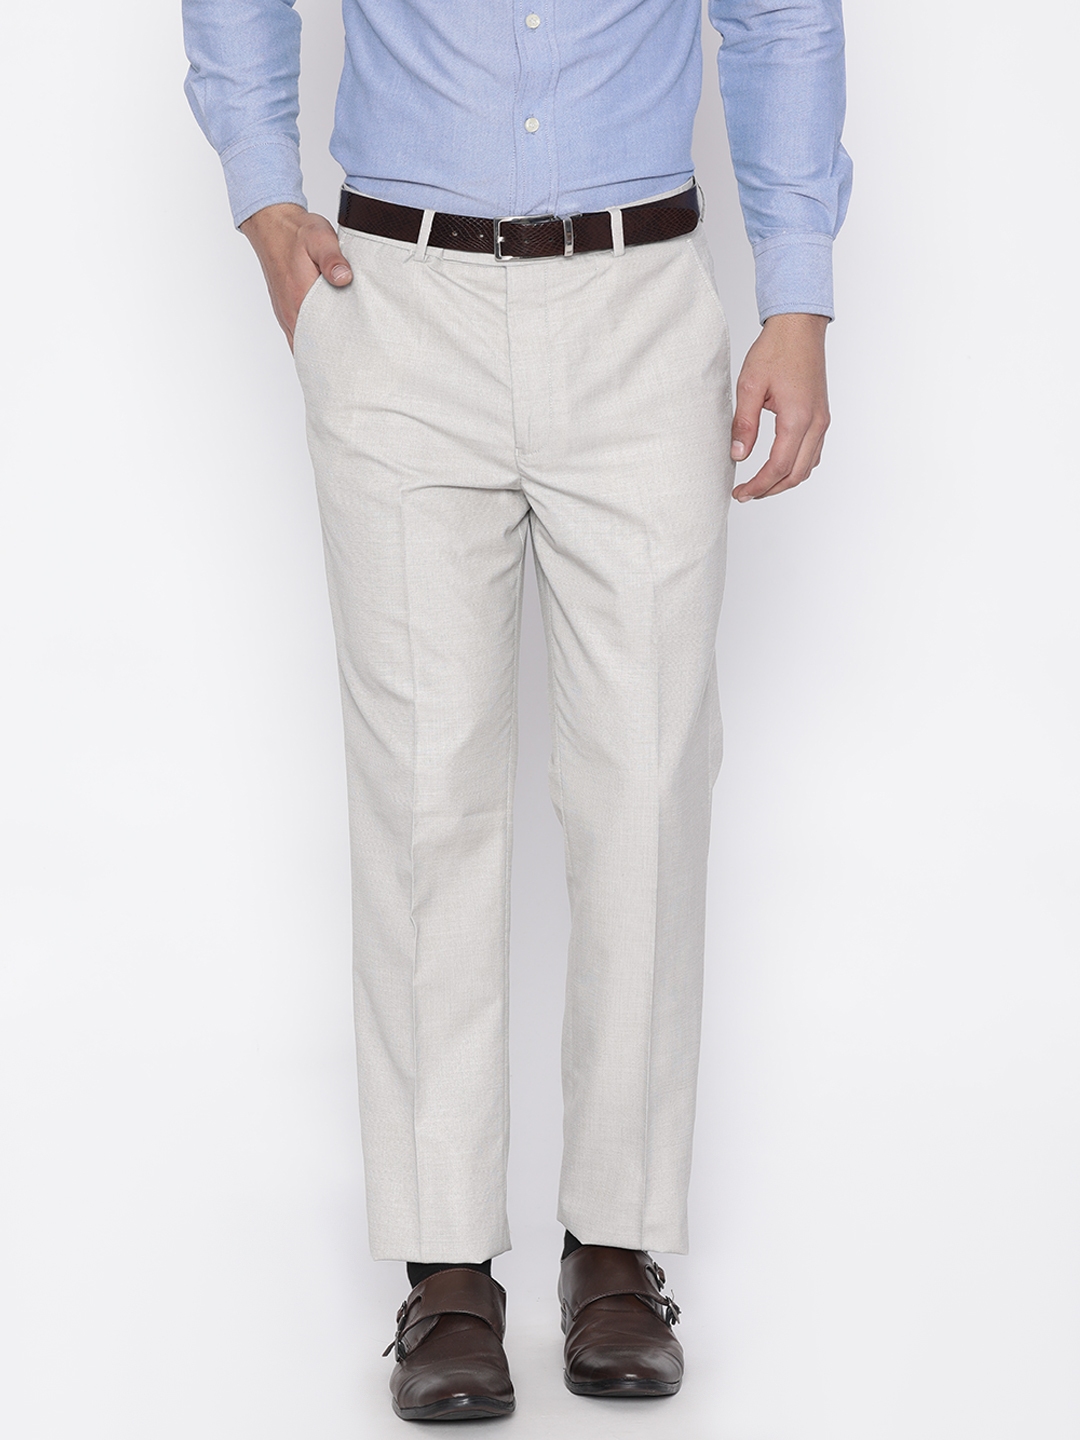 Pleated Trousers Formal Wear Corporate Trouser